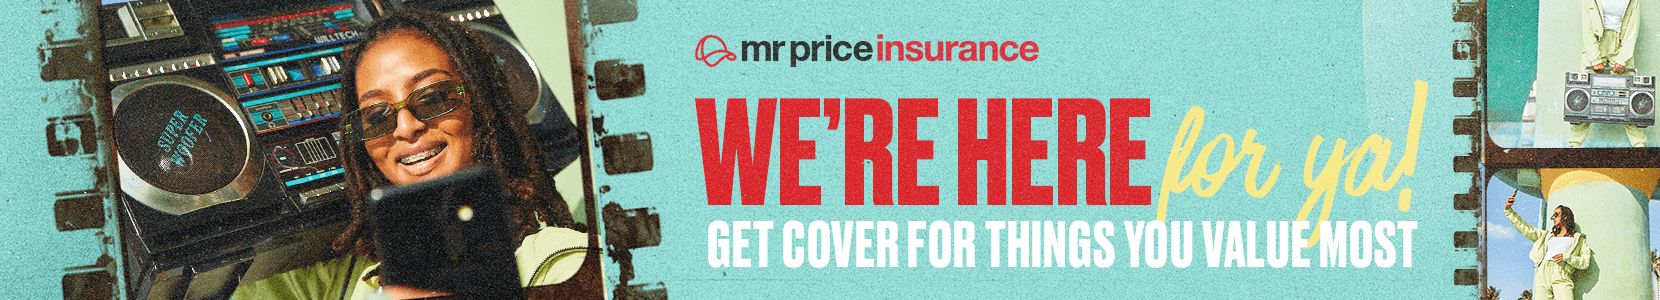 Mr Price Insurance